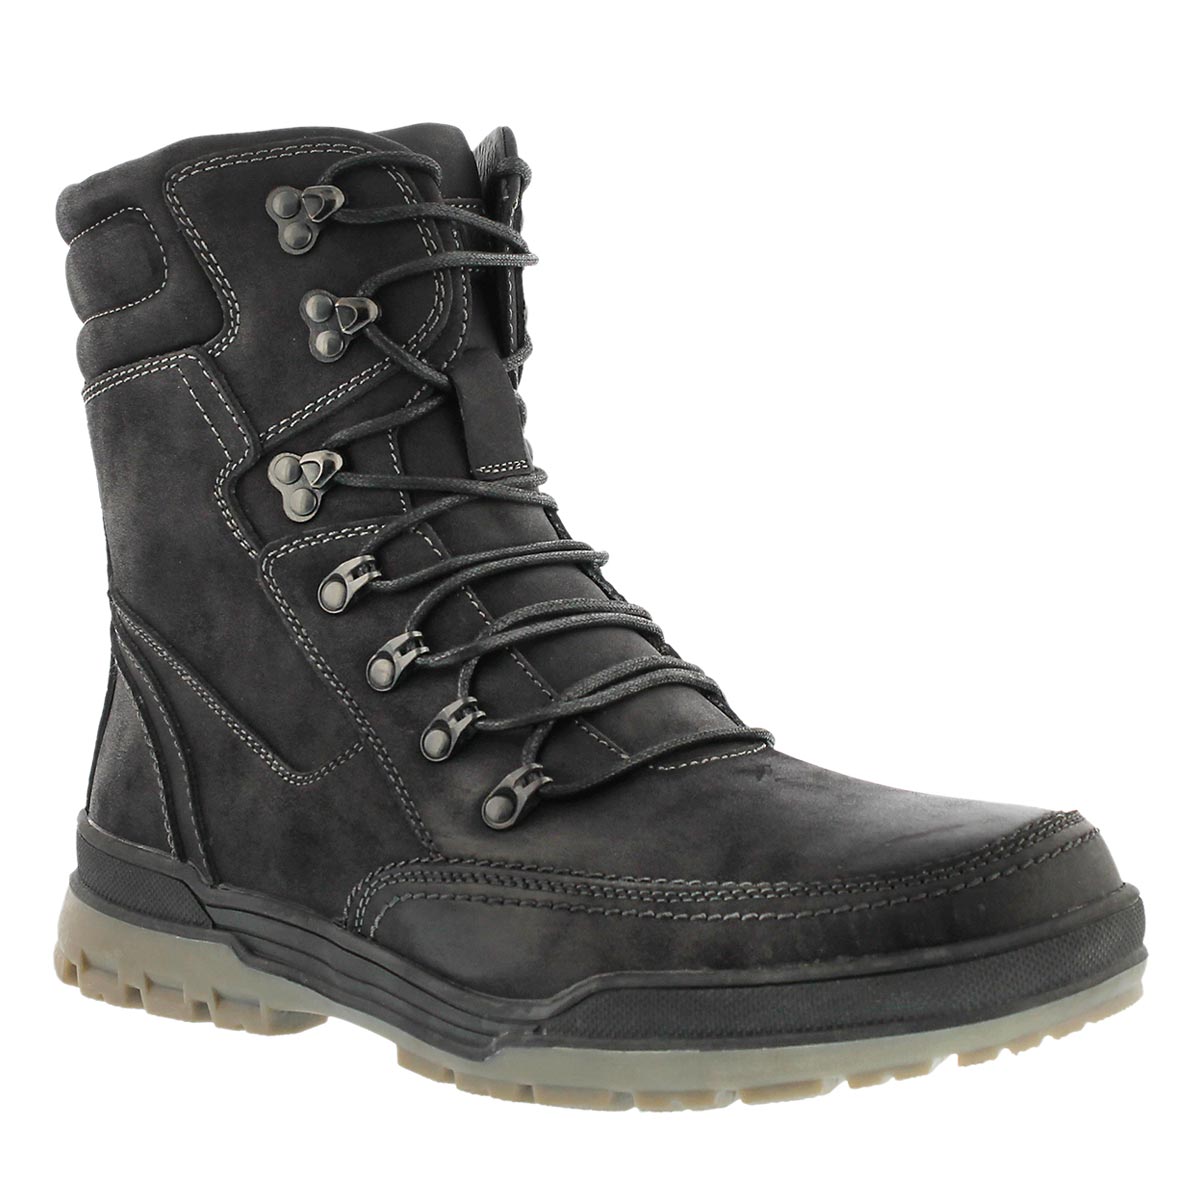 Godik Men's YAN black waterproof winter boots | SoftMoc.com